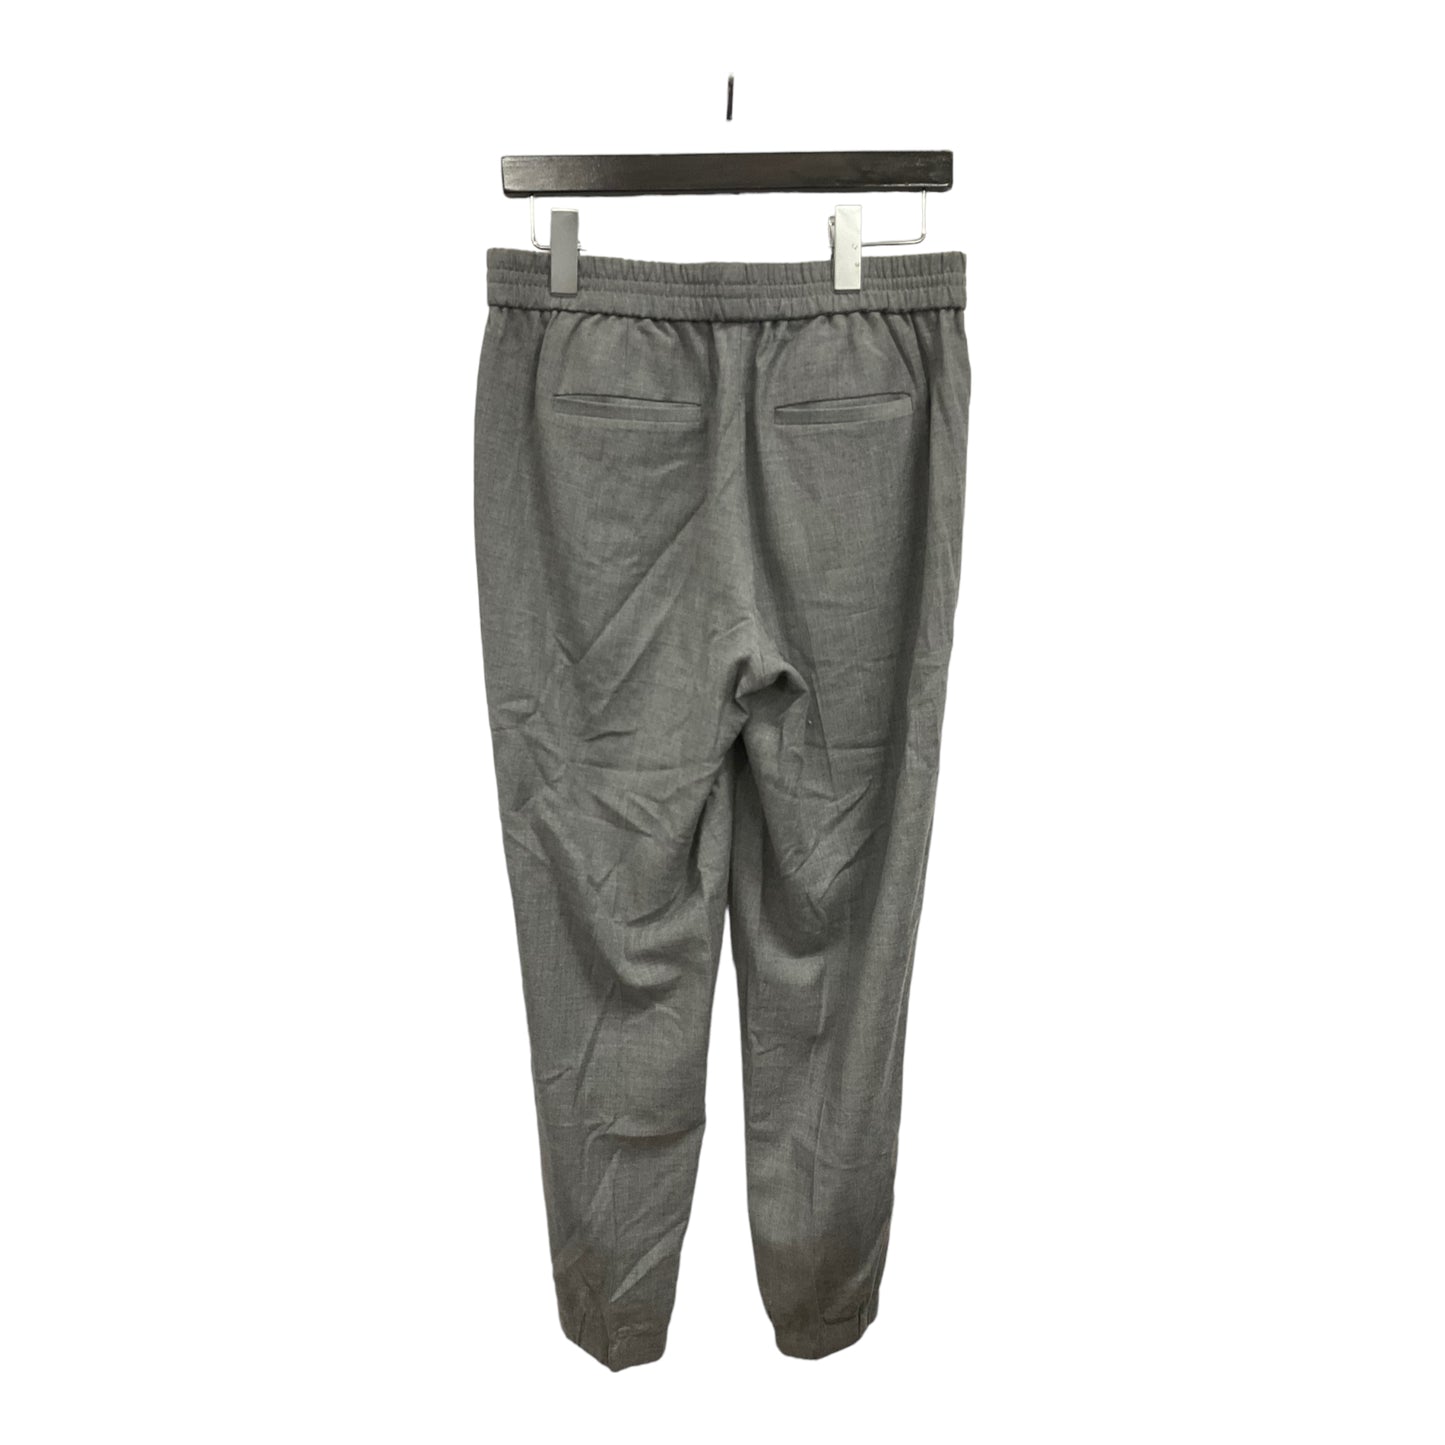 Pants Joggers By J Crew  Size: 6long